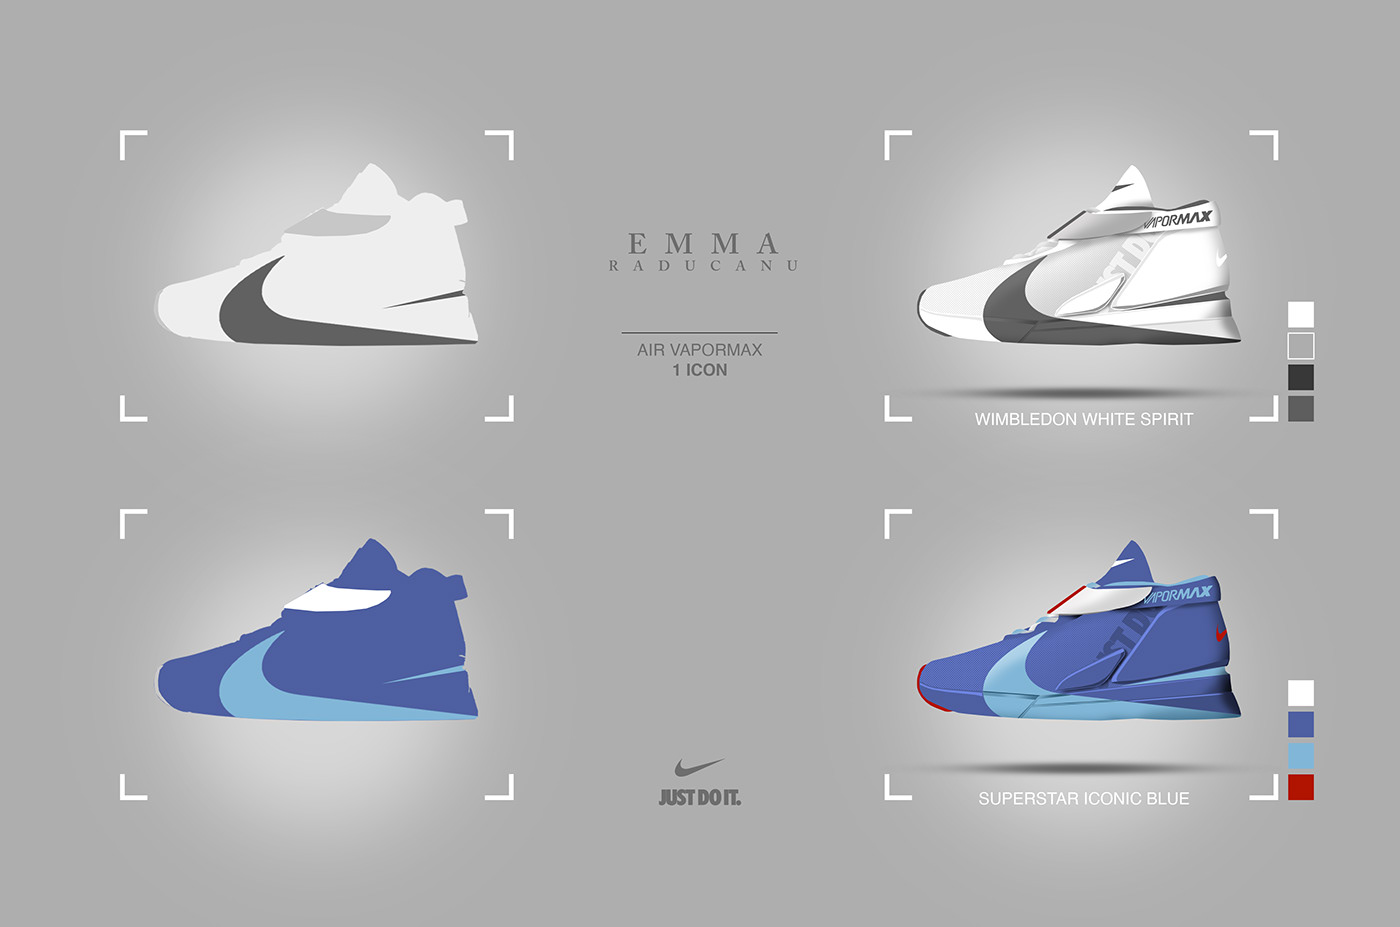 Emma Raducanu enrico bondi enrico bondi design Nike nike design Nike Shoes Nike Tennis shoes design TENNIS SHOES vapormax